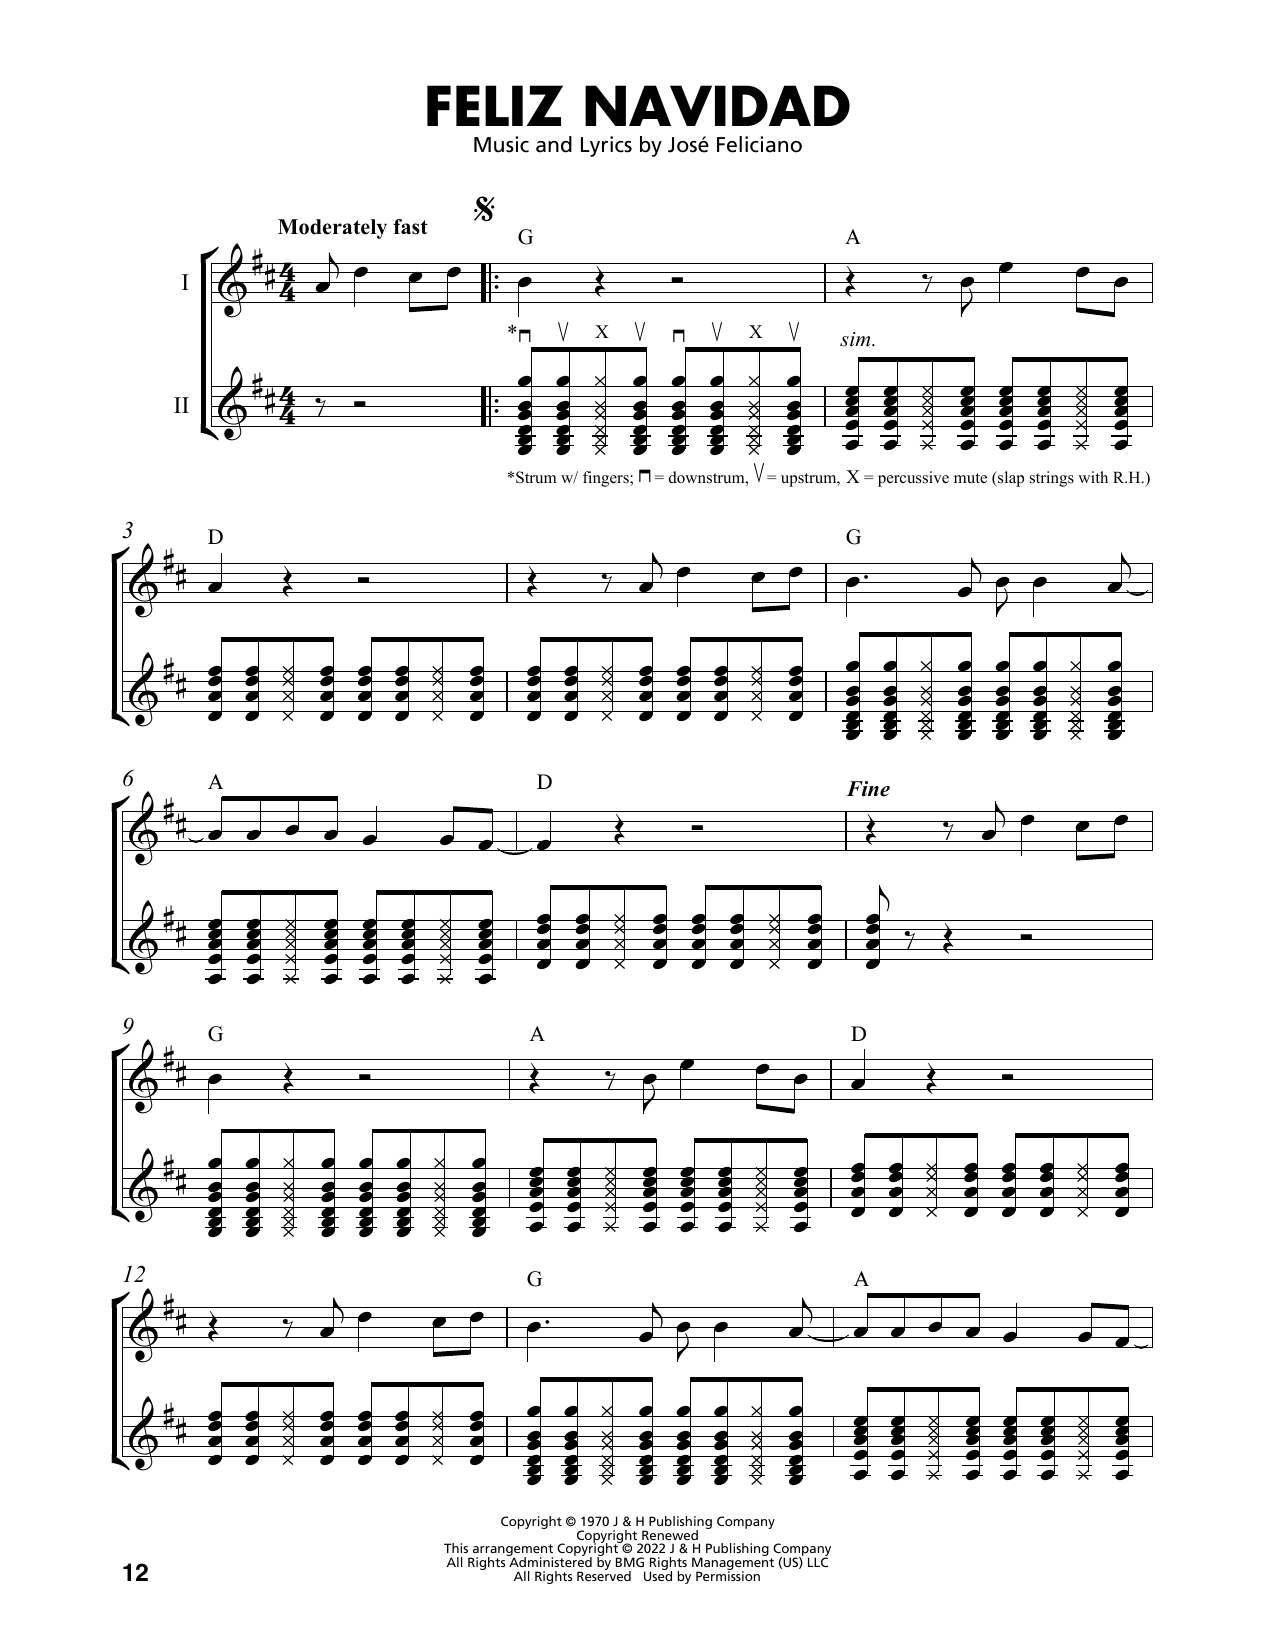 Jose Feliciano Feliz Navidad (arr. Mark Phillips) Sheet Music Notes & Chords for Easy Guitar Tab - Download or Print PDF